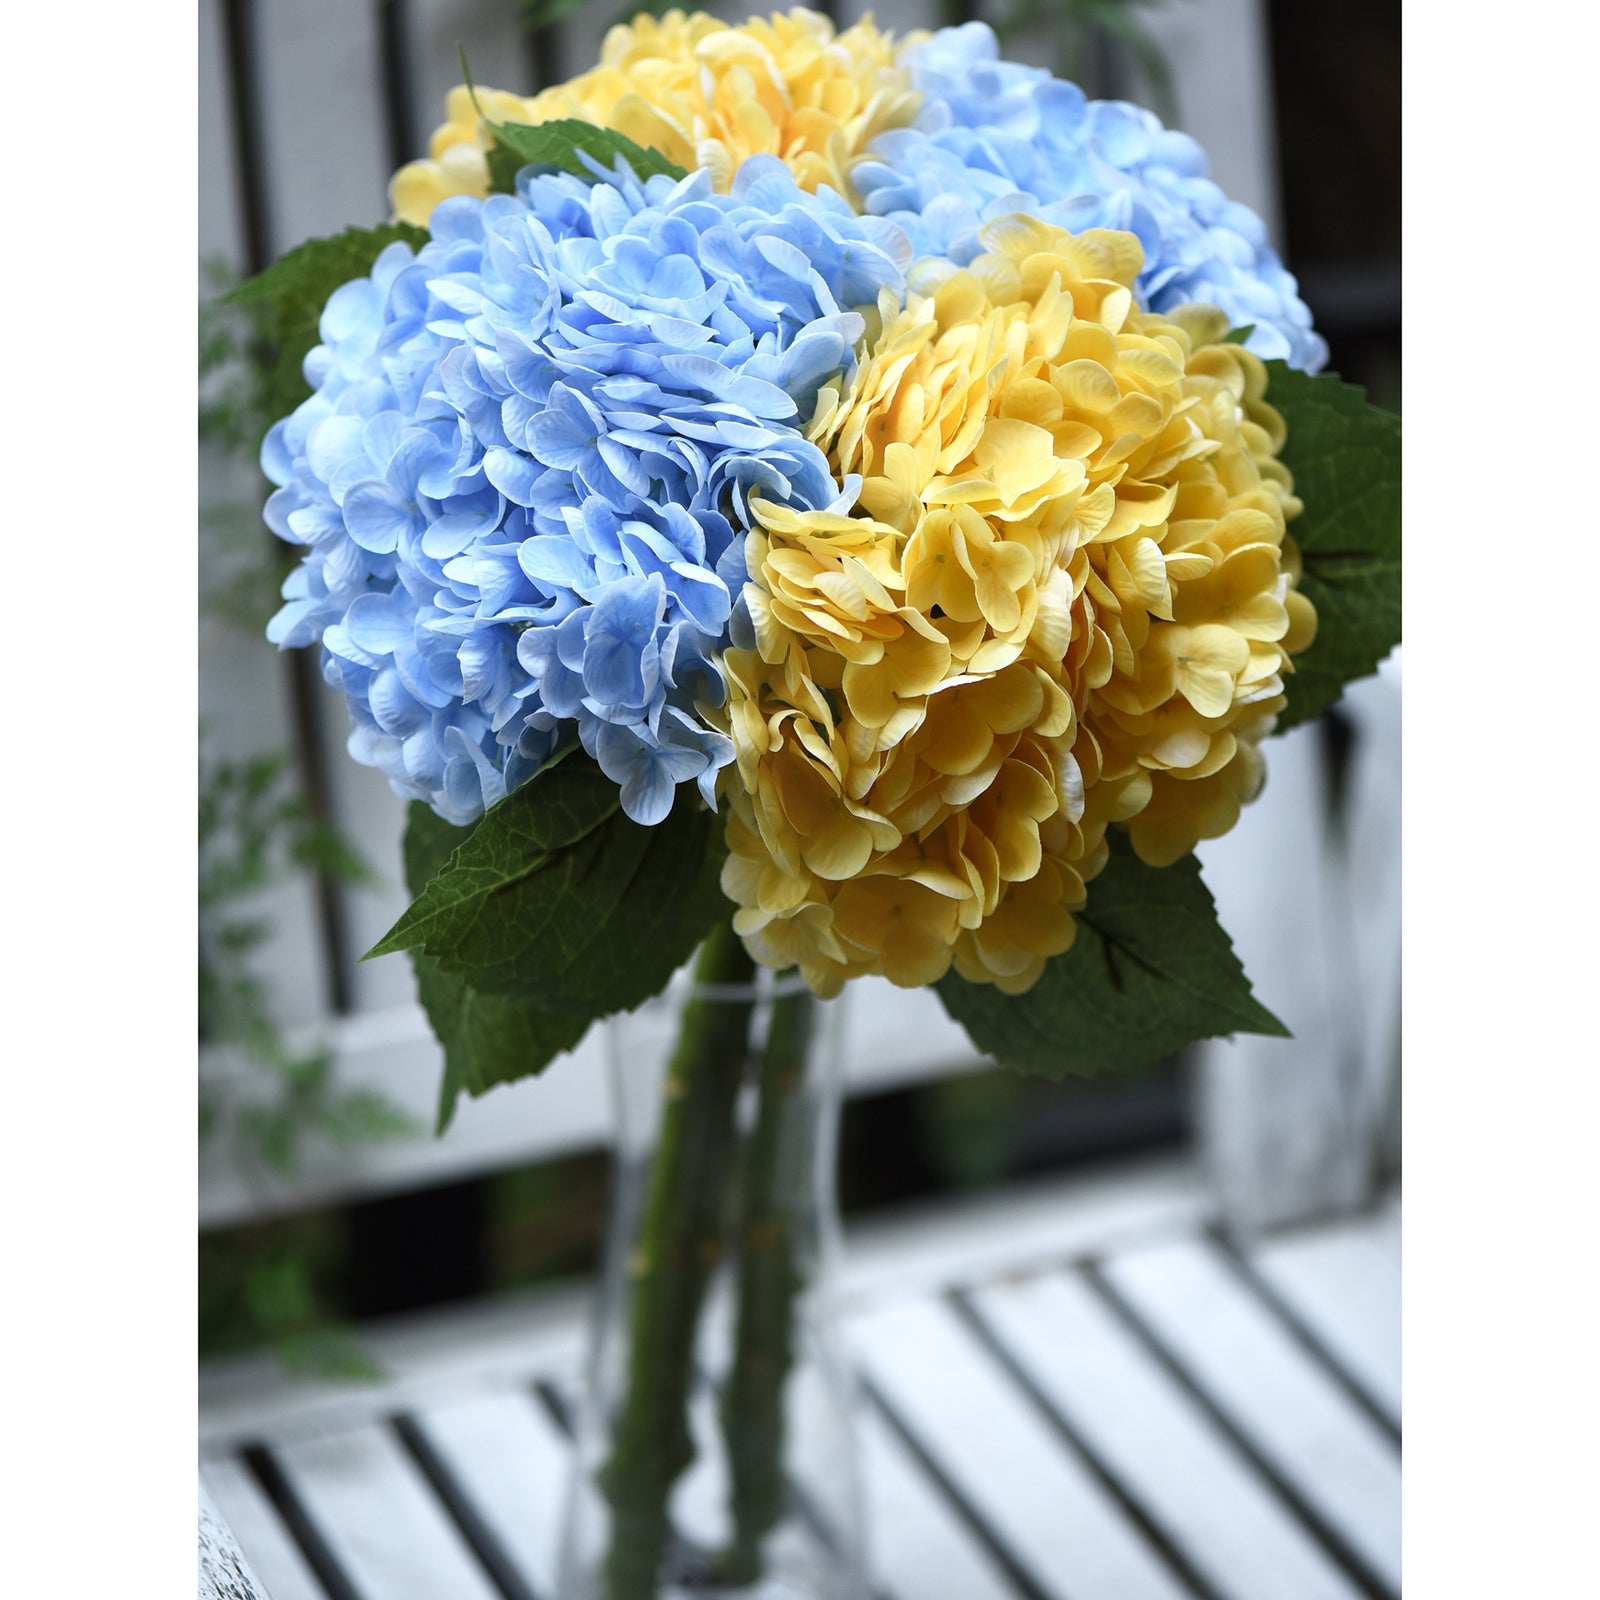 FiveSeasonStuff 2 Stems Real Touch Petals and Leaves Artificial Hydrangea Flowers Long Stem Floral Arrangement | for Wedding Bridal Party Home Décor DIY Floral Decoration (Blue | Yellow)